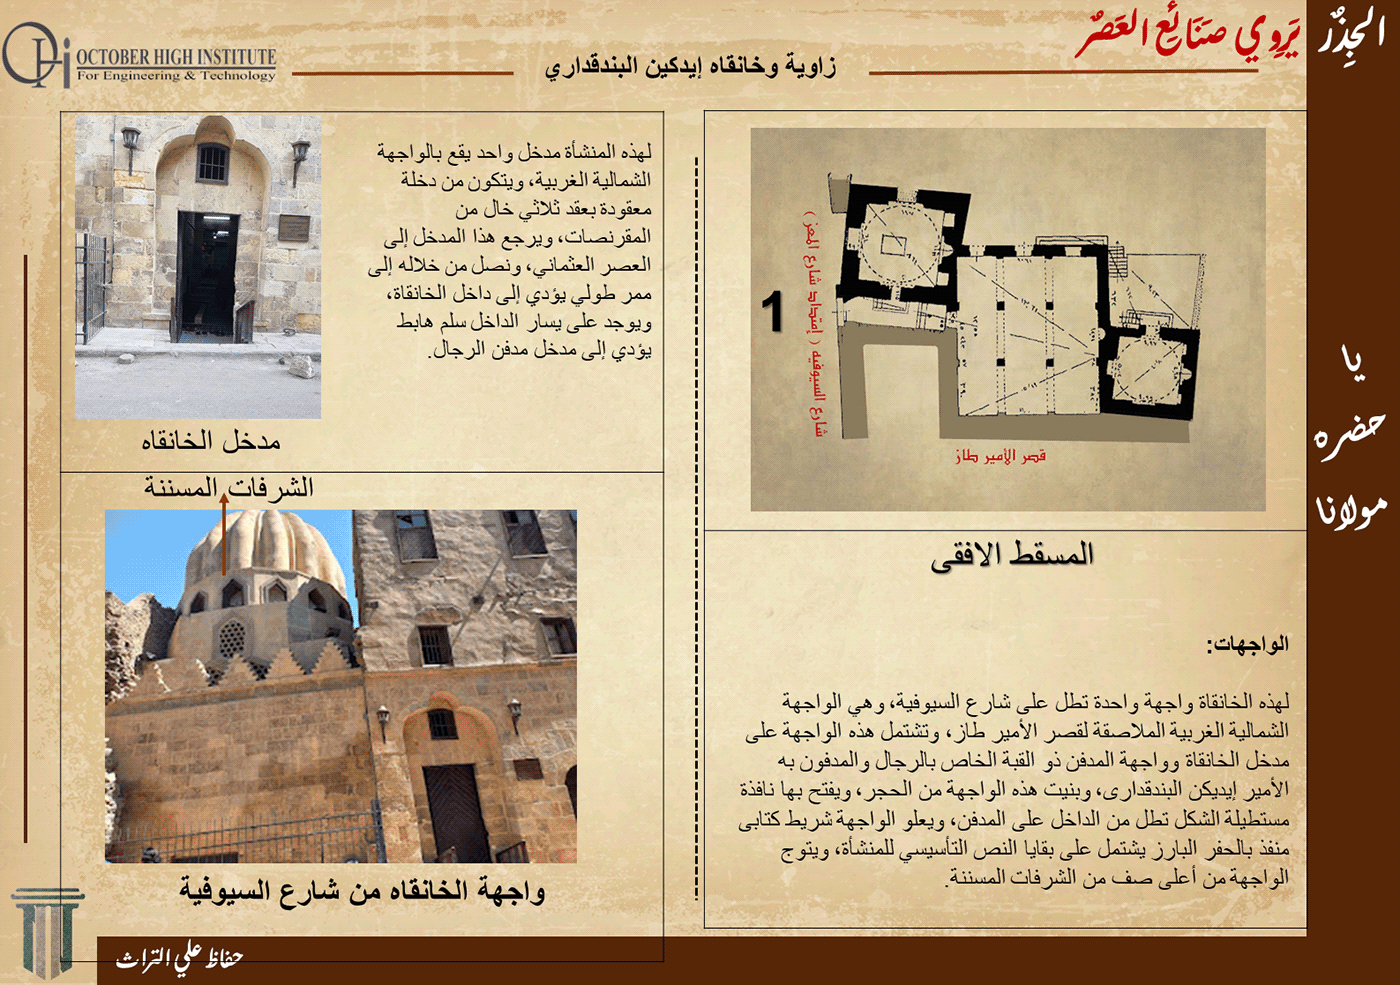 cairo heritage history culture magazine architecture